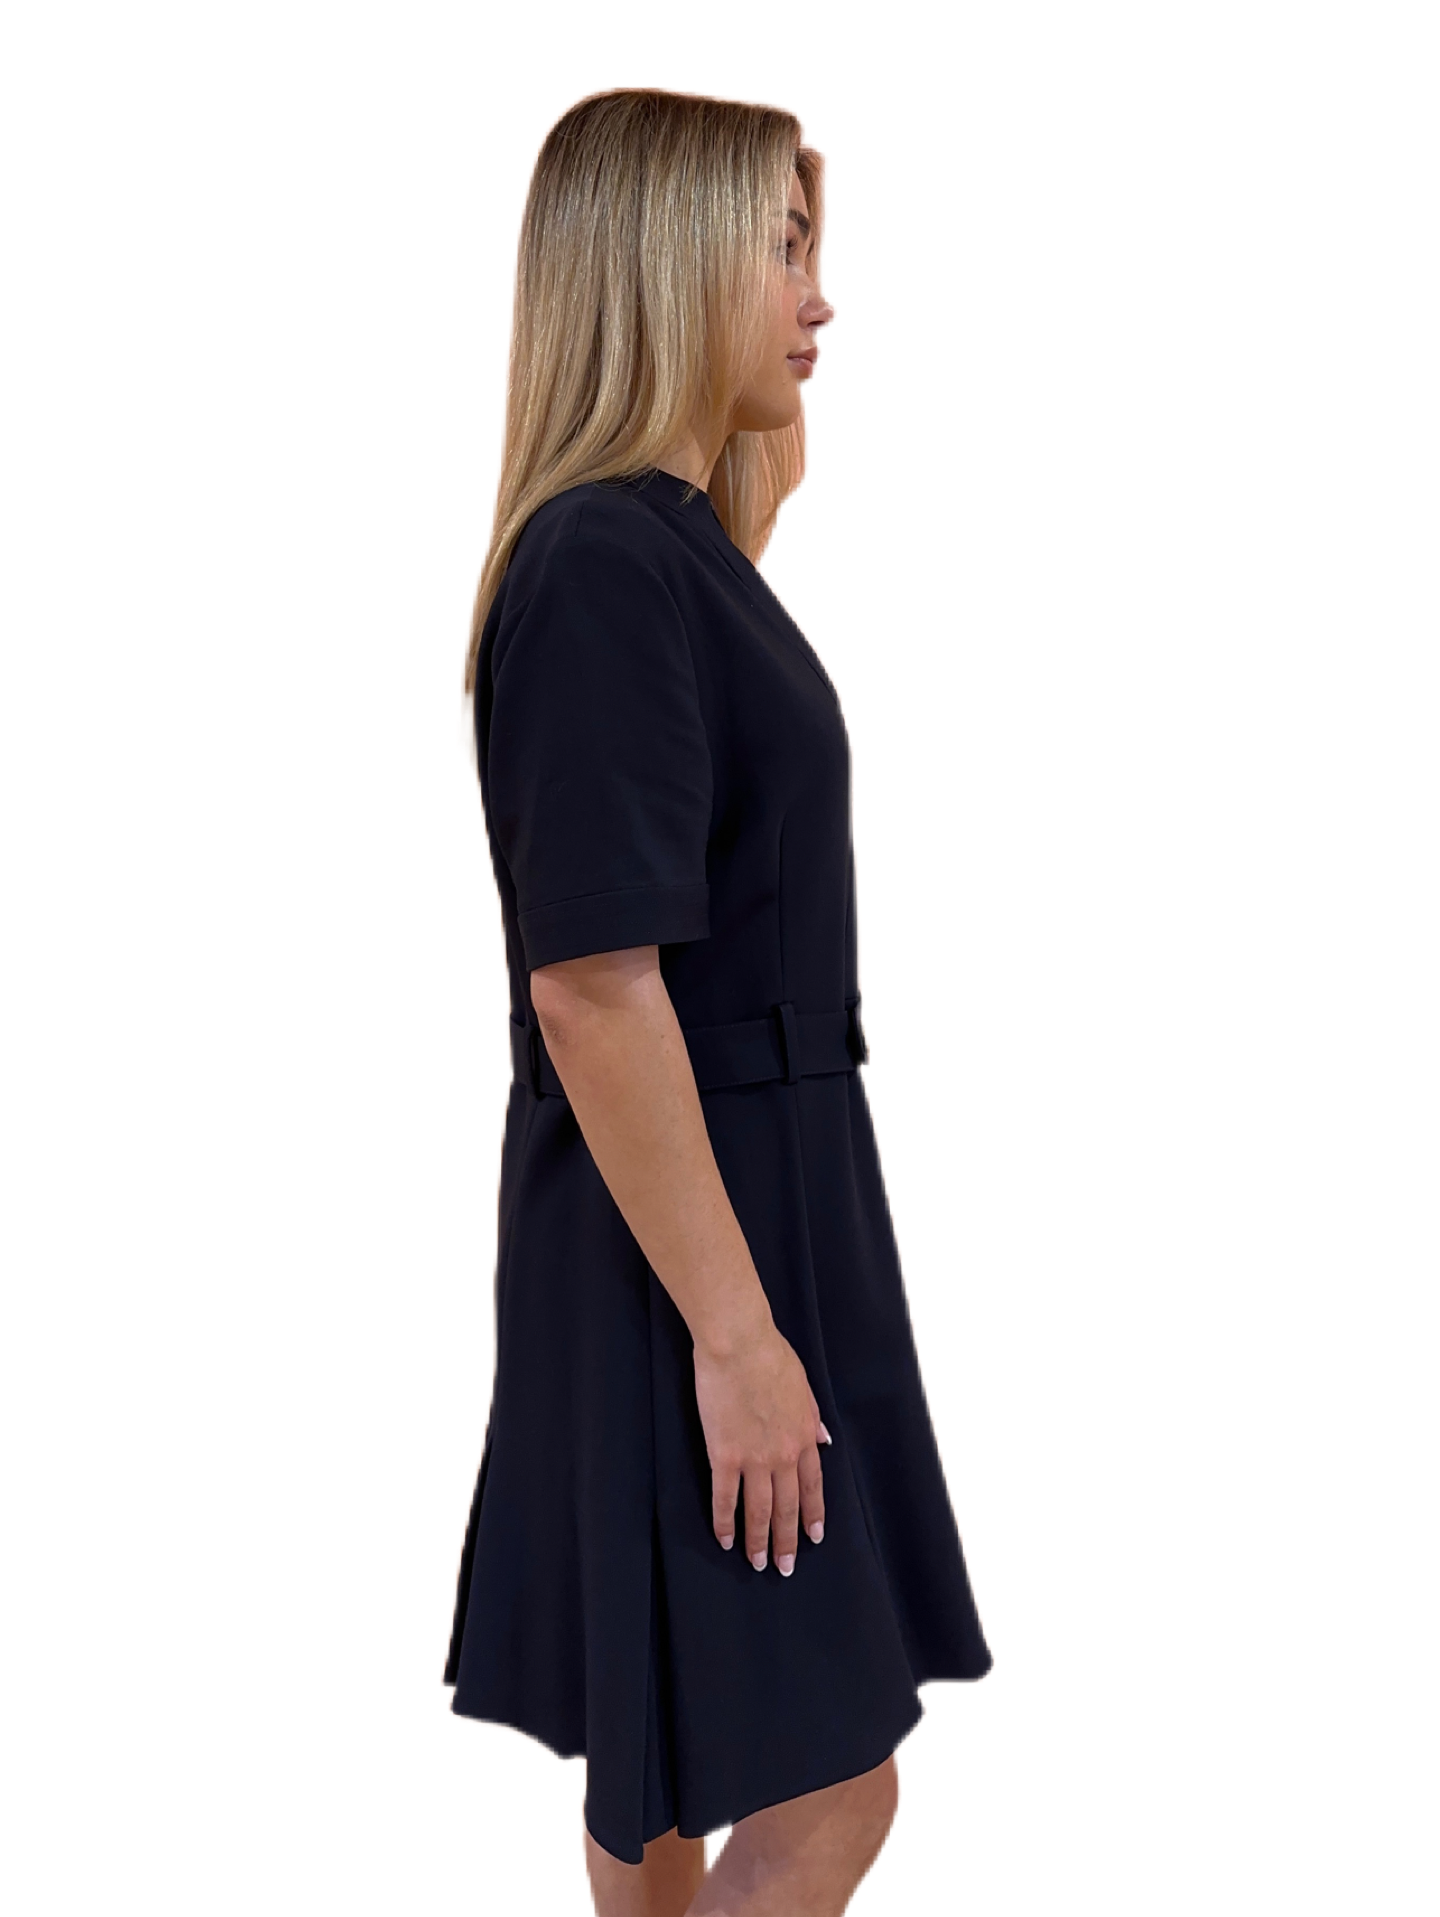 Scanlan Theodore Black Short-Sleeve Dress. Size: 12